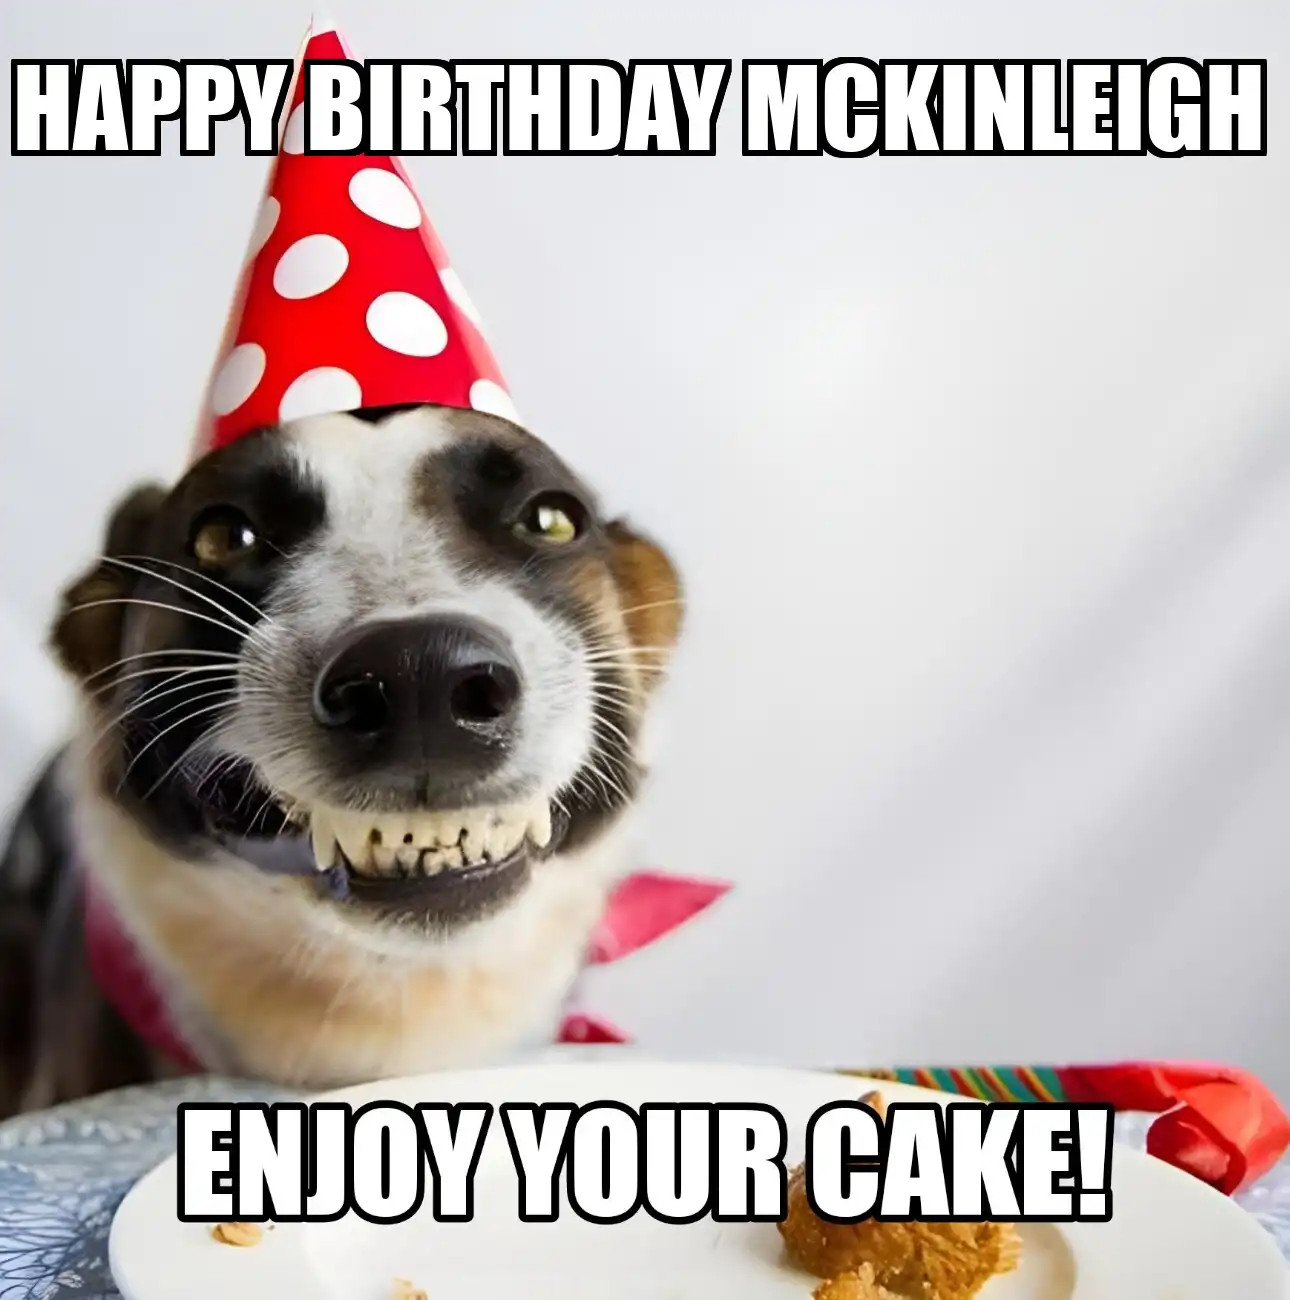 Happy Birthday Mckinleigh Enjoy Your Cake Dog Meme